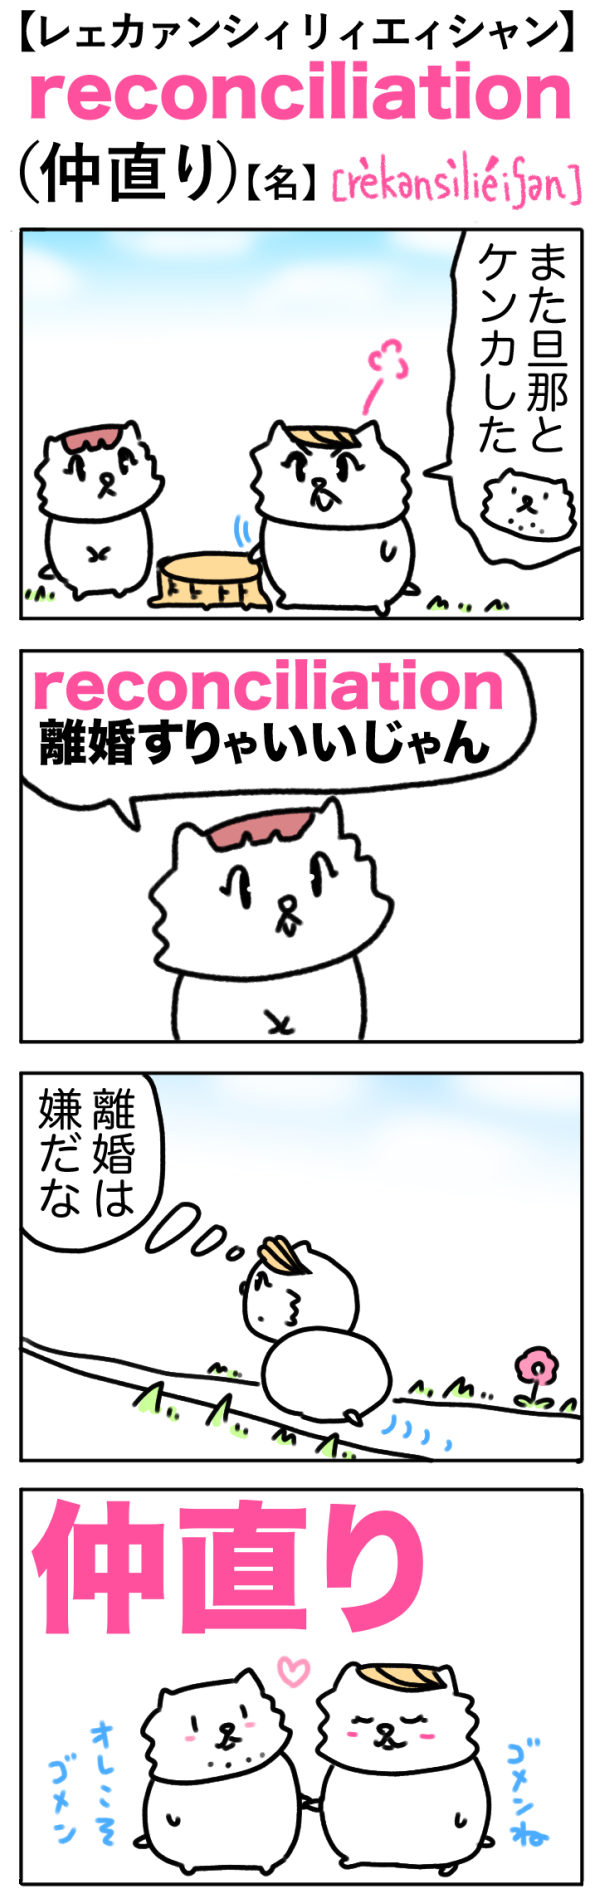 reconciliation（仲直り）の語呂合わせ英単語